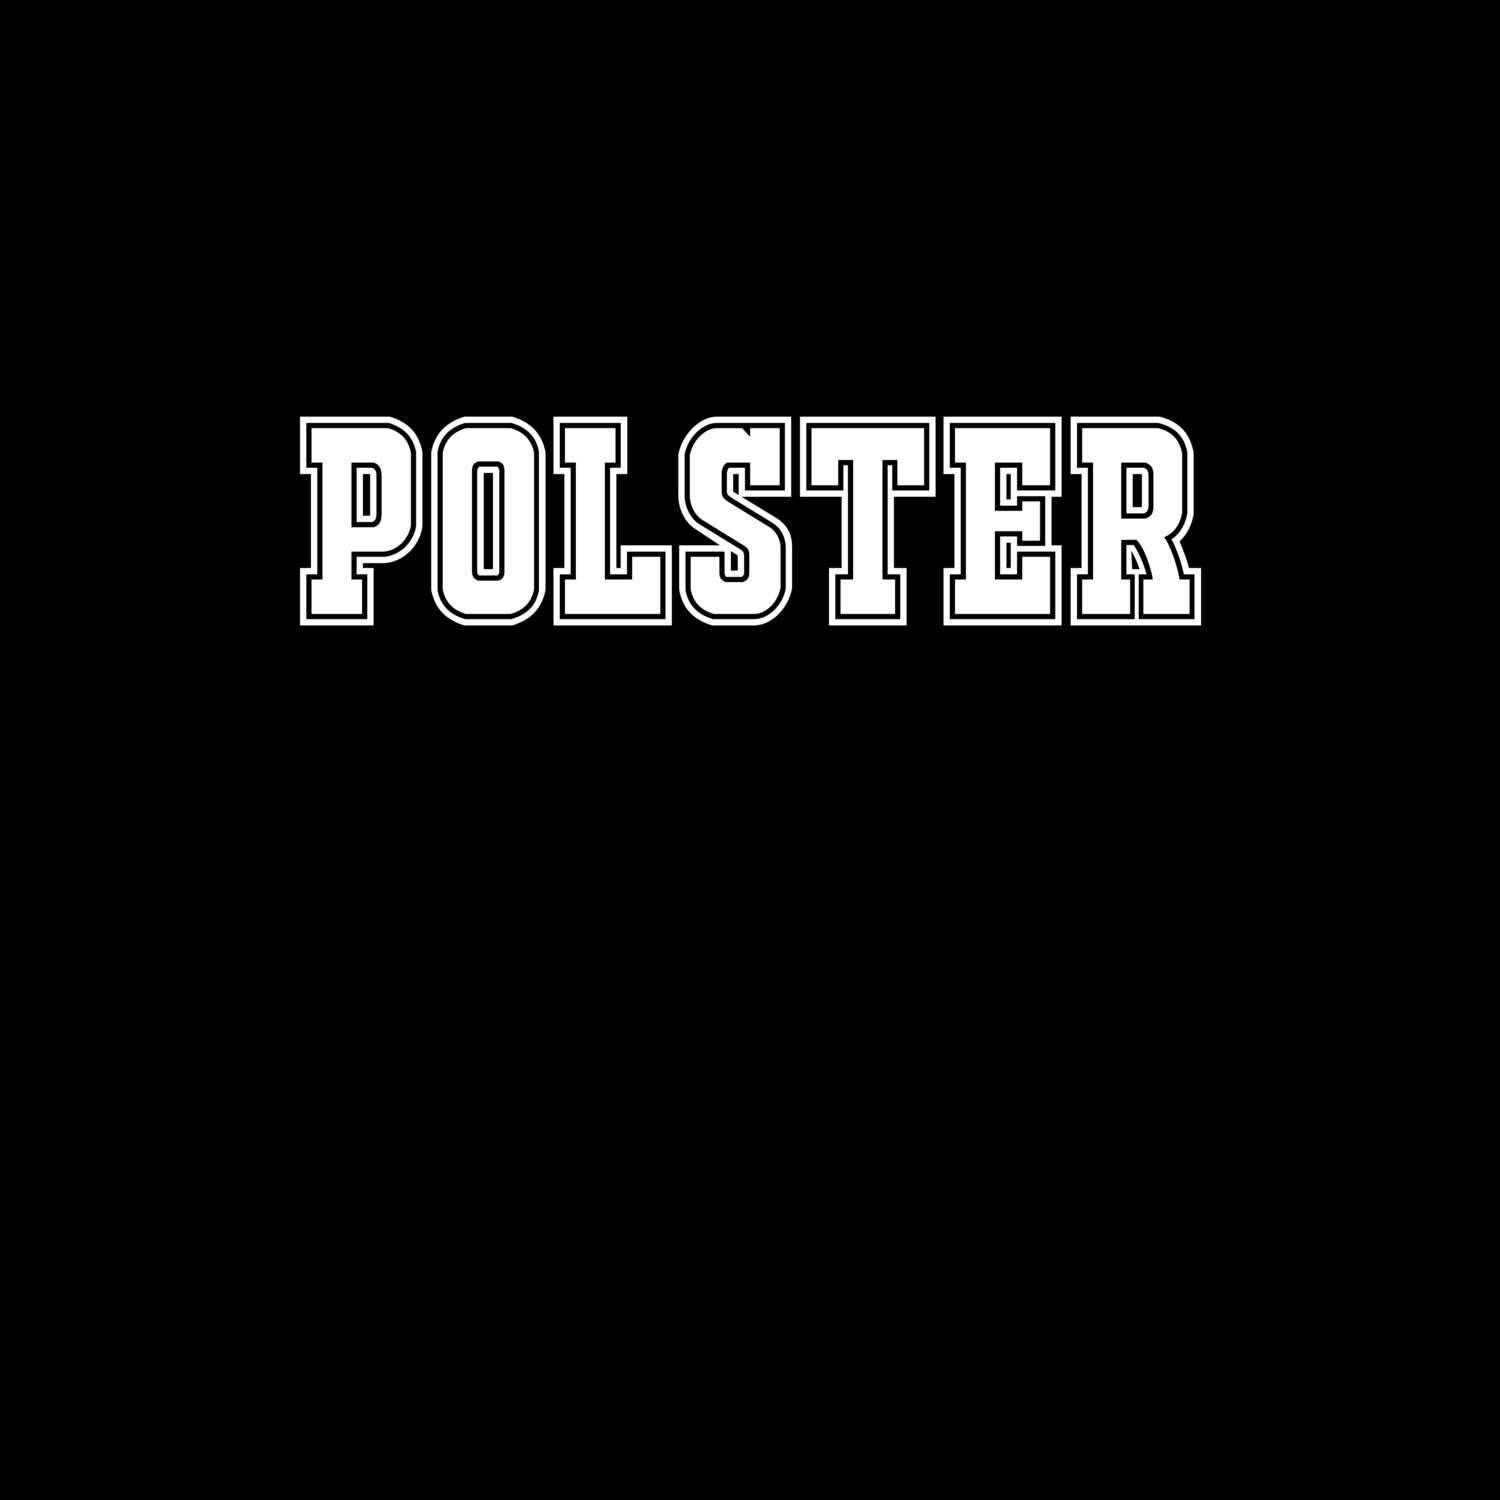 Polster T-Shirt »Classic«